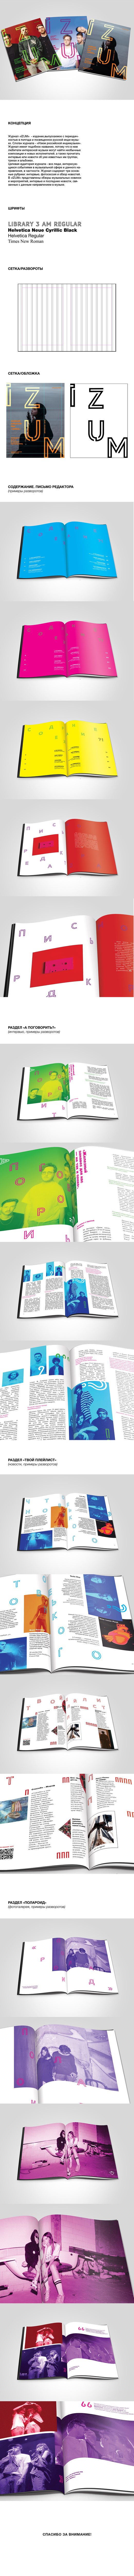 #Design #graphic design #magazine #typography #графический дизайн #дизайн #типографика